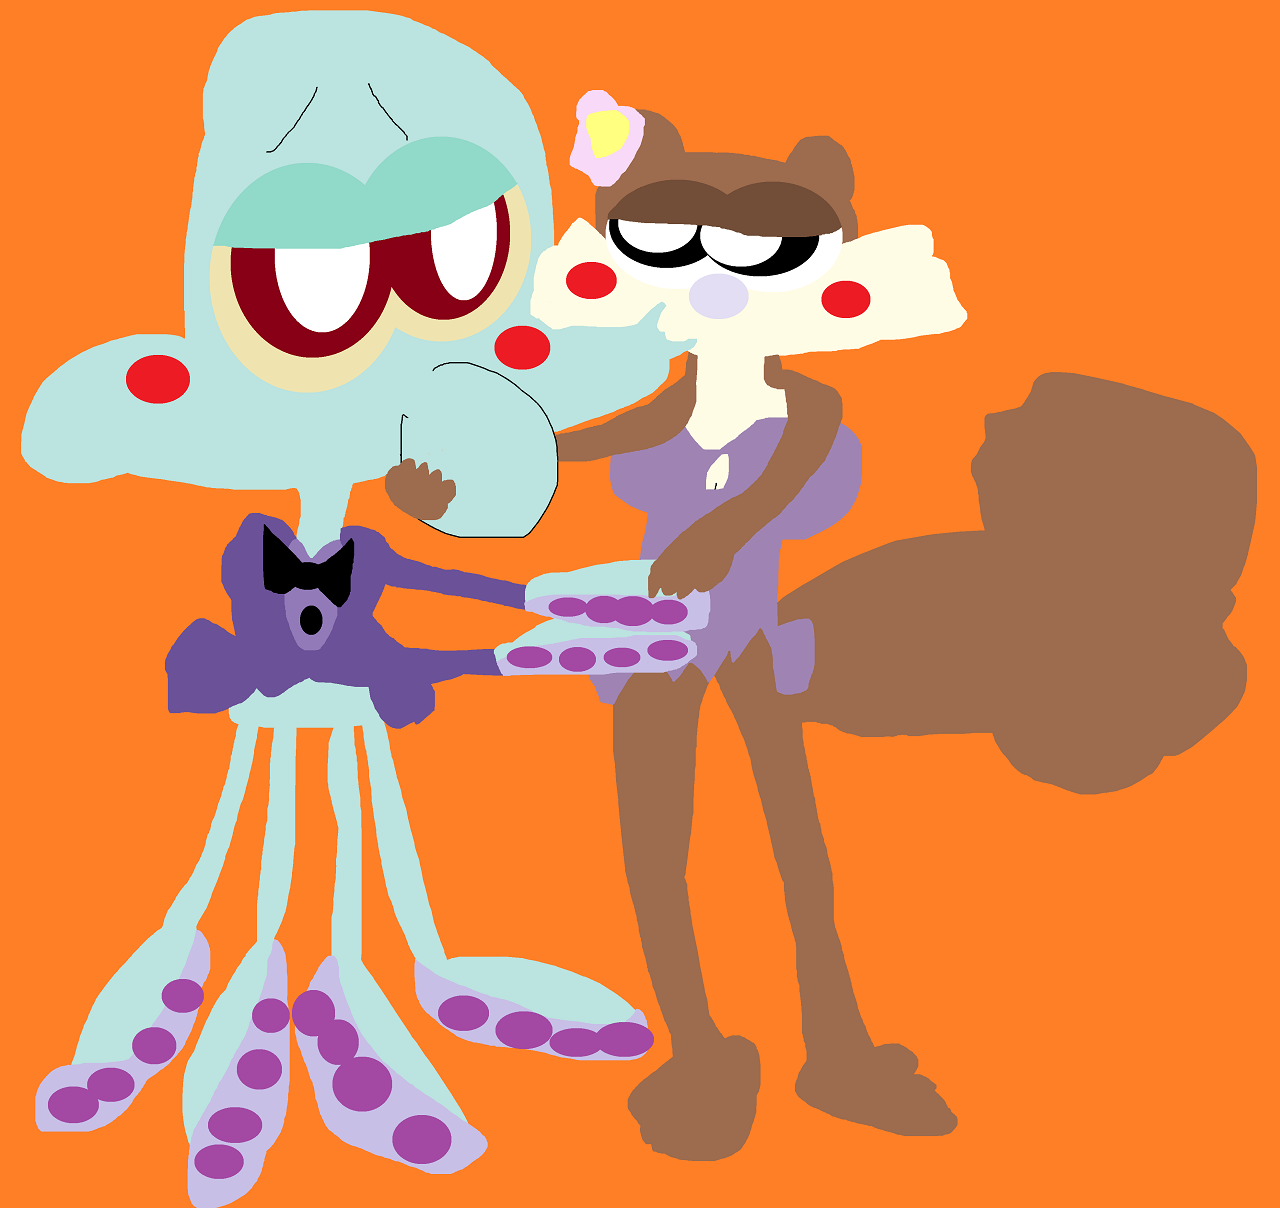 Squidward Tentacles And Sandy Cheeks Dancing Cheek To Cheek Alt by Falconlobo